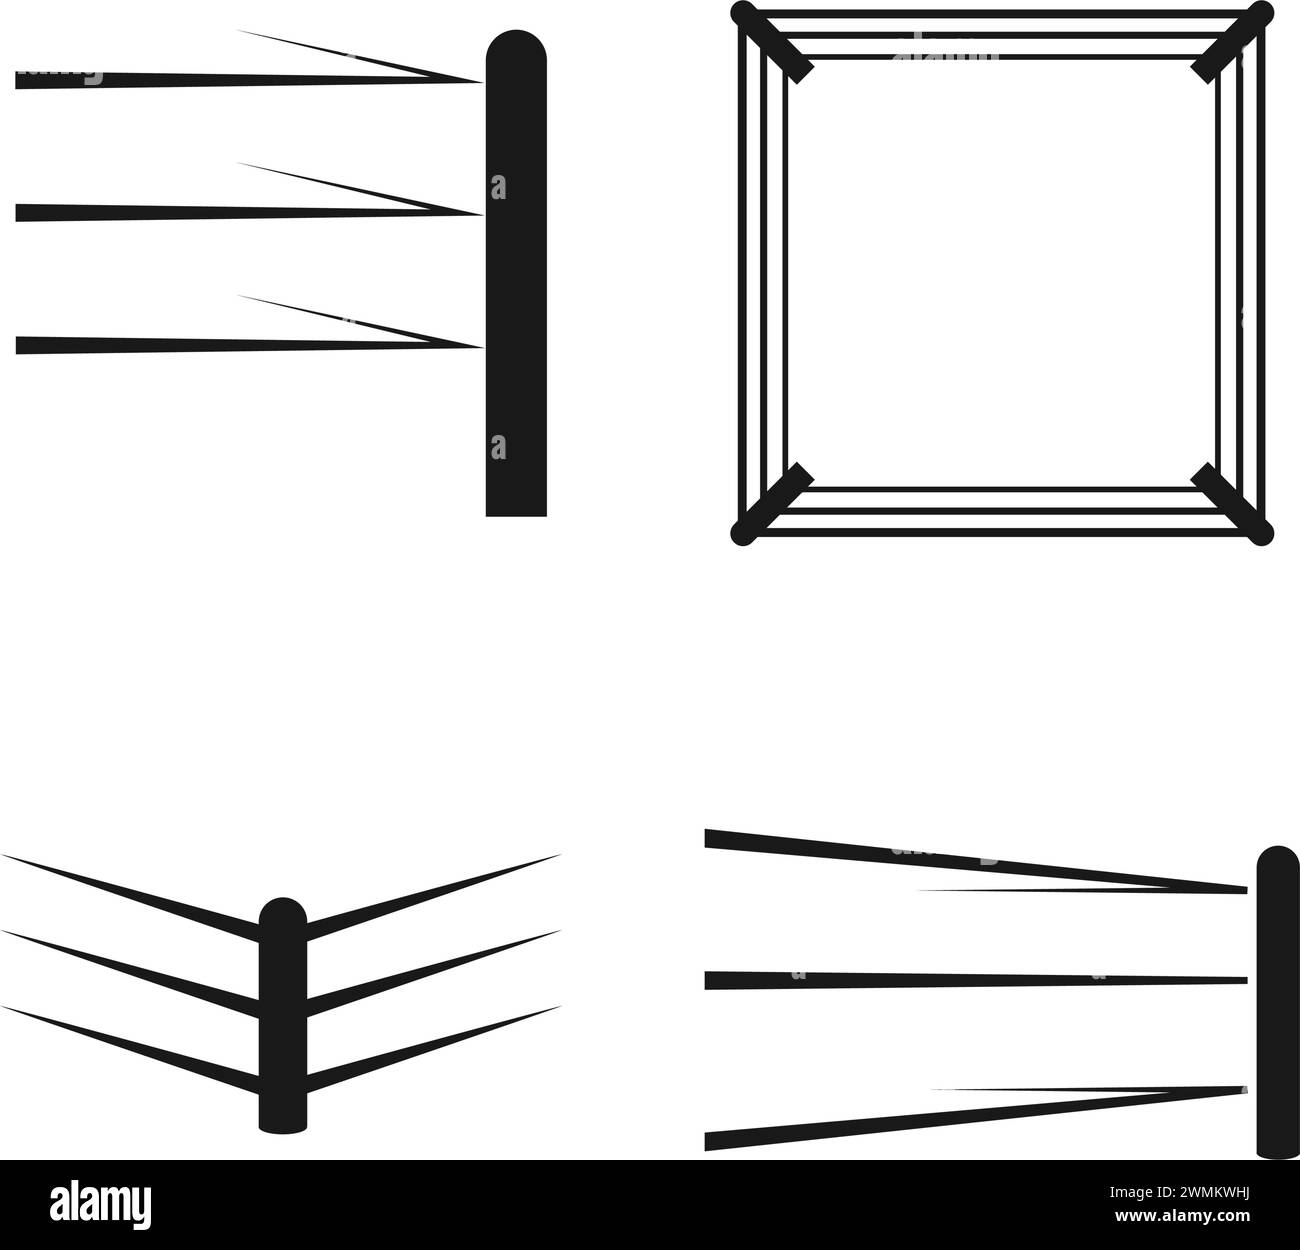 boxing ring icon vector illustration design Stock Vector